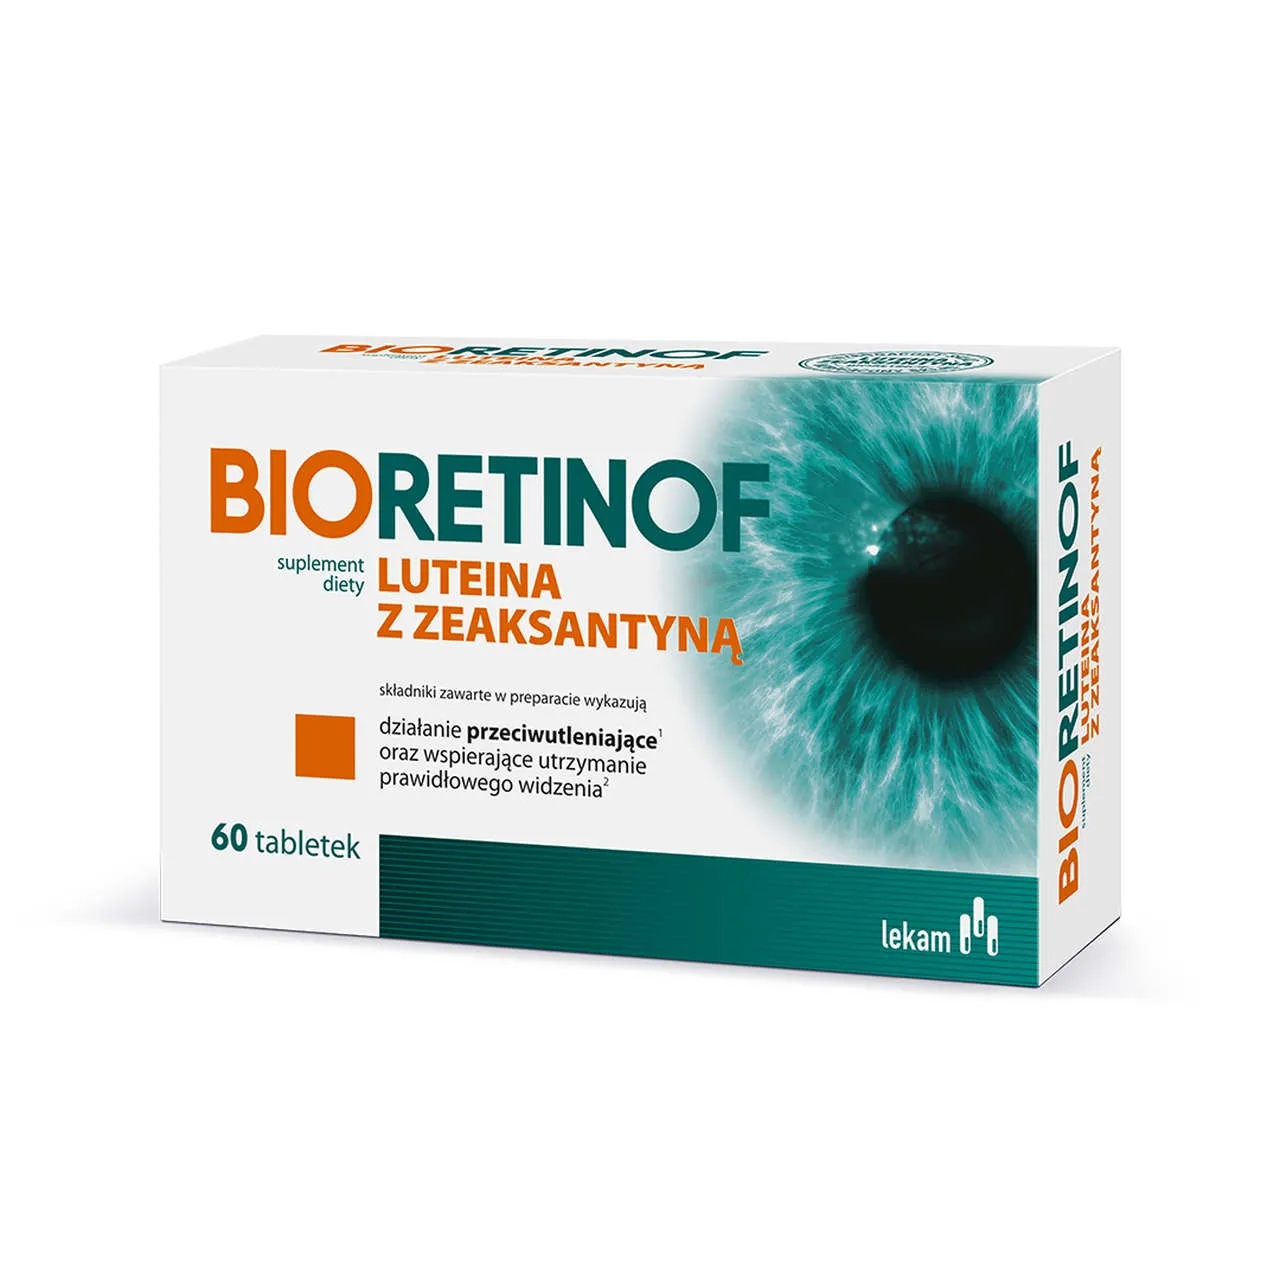 Bioretinof Luteina z Zeaksantyną, suplement diety, 60 tabletek